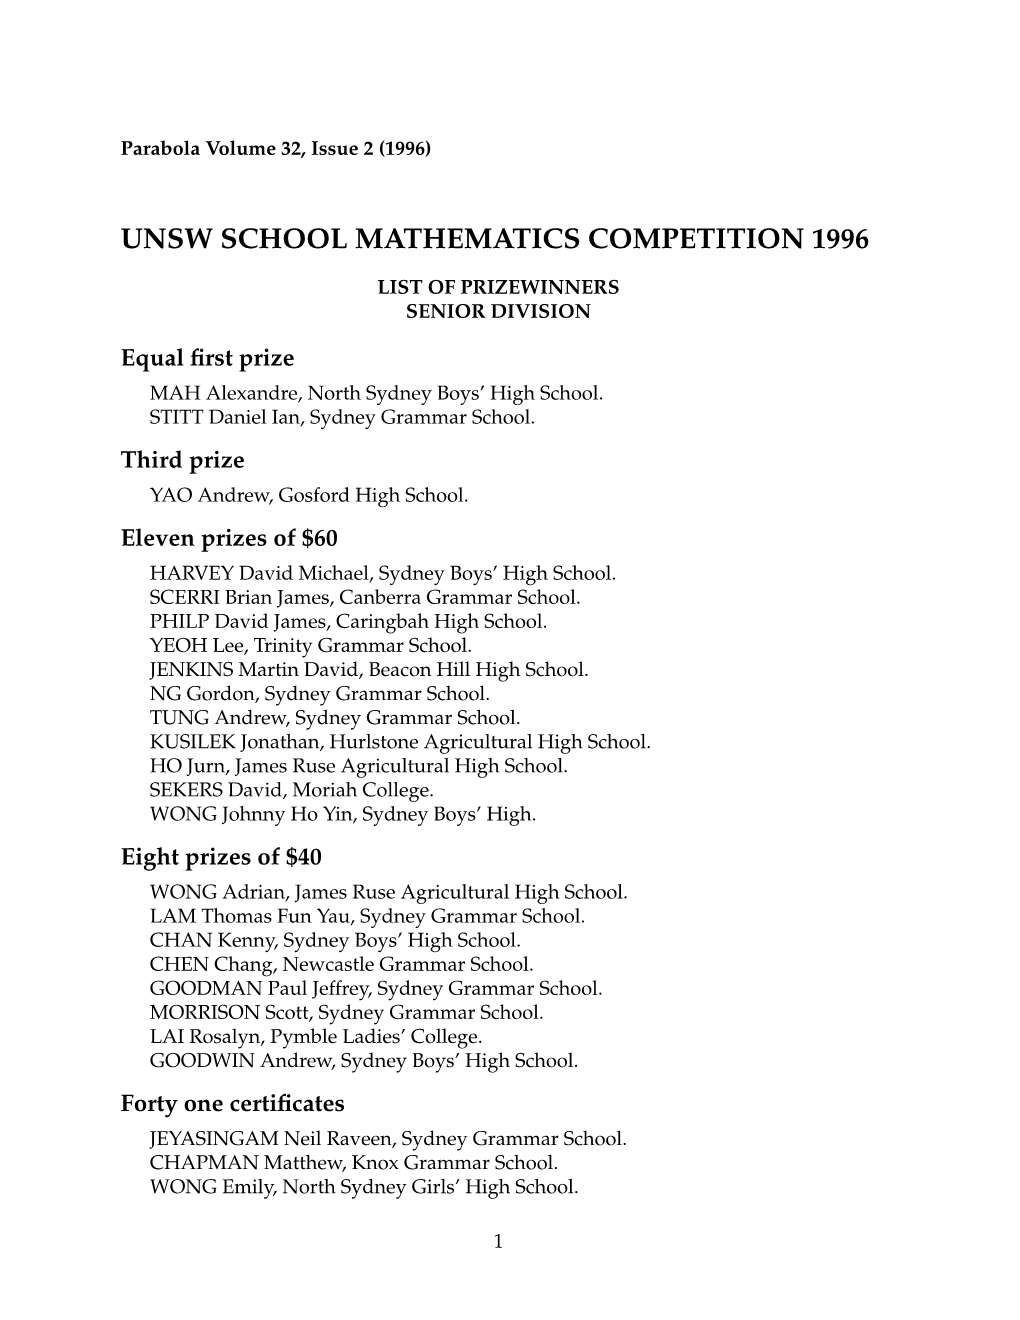 Unsw School Mathematics Competition 1996